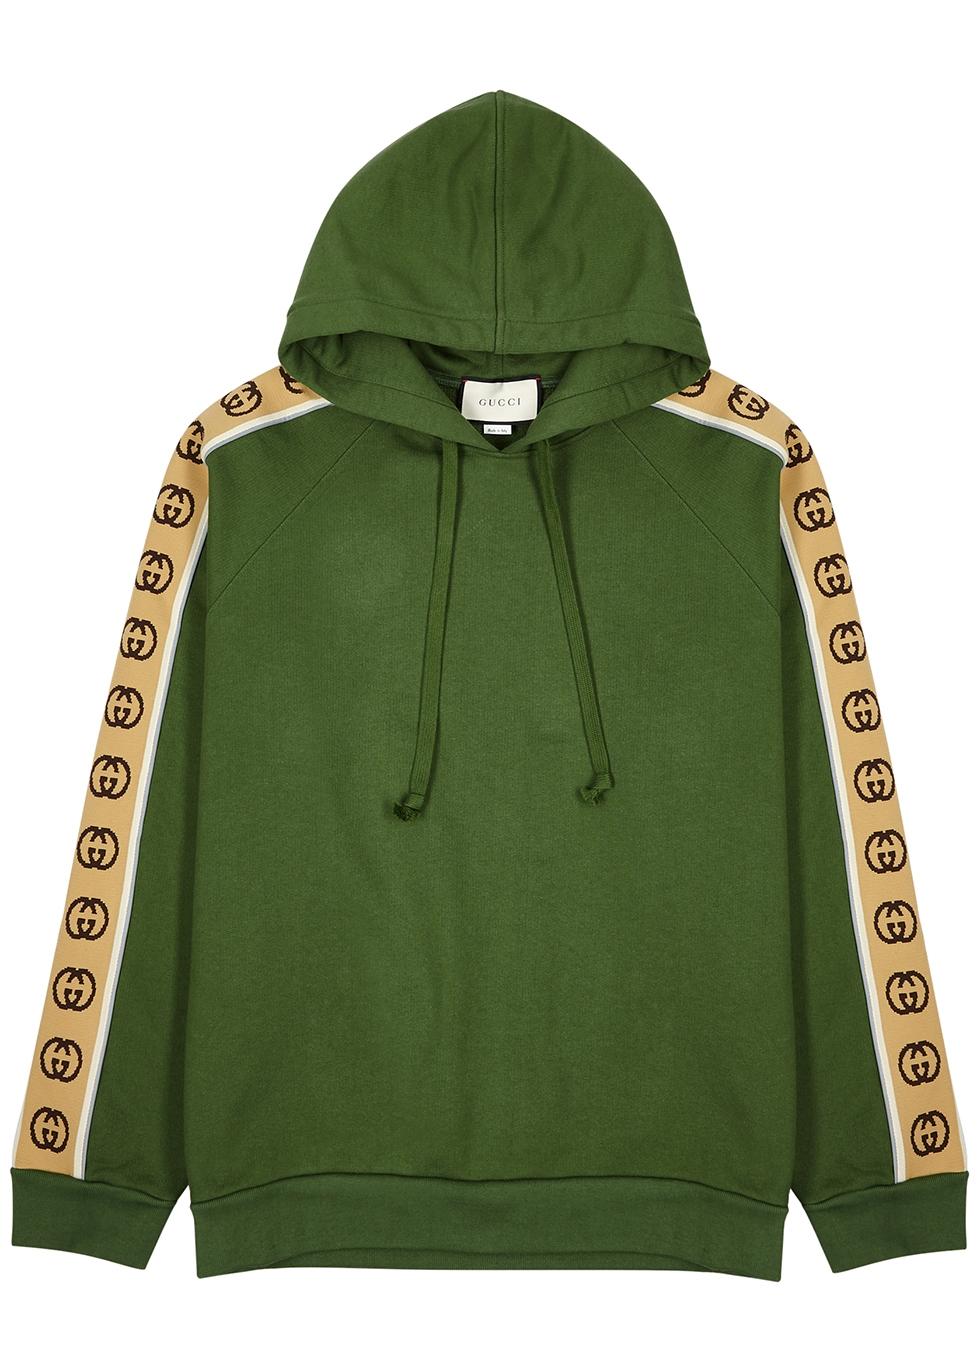 Gucci Green GG-striped Cotton Sweatshirt for Men - Lyst